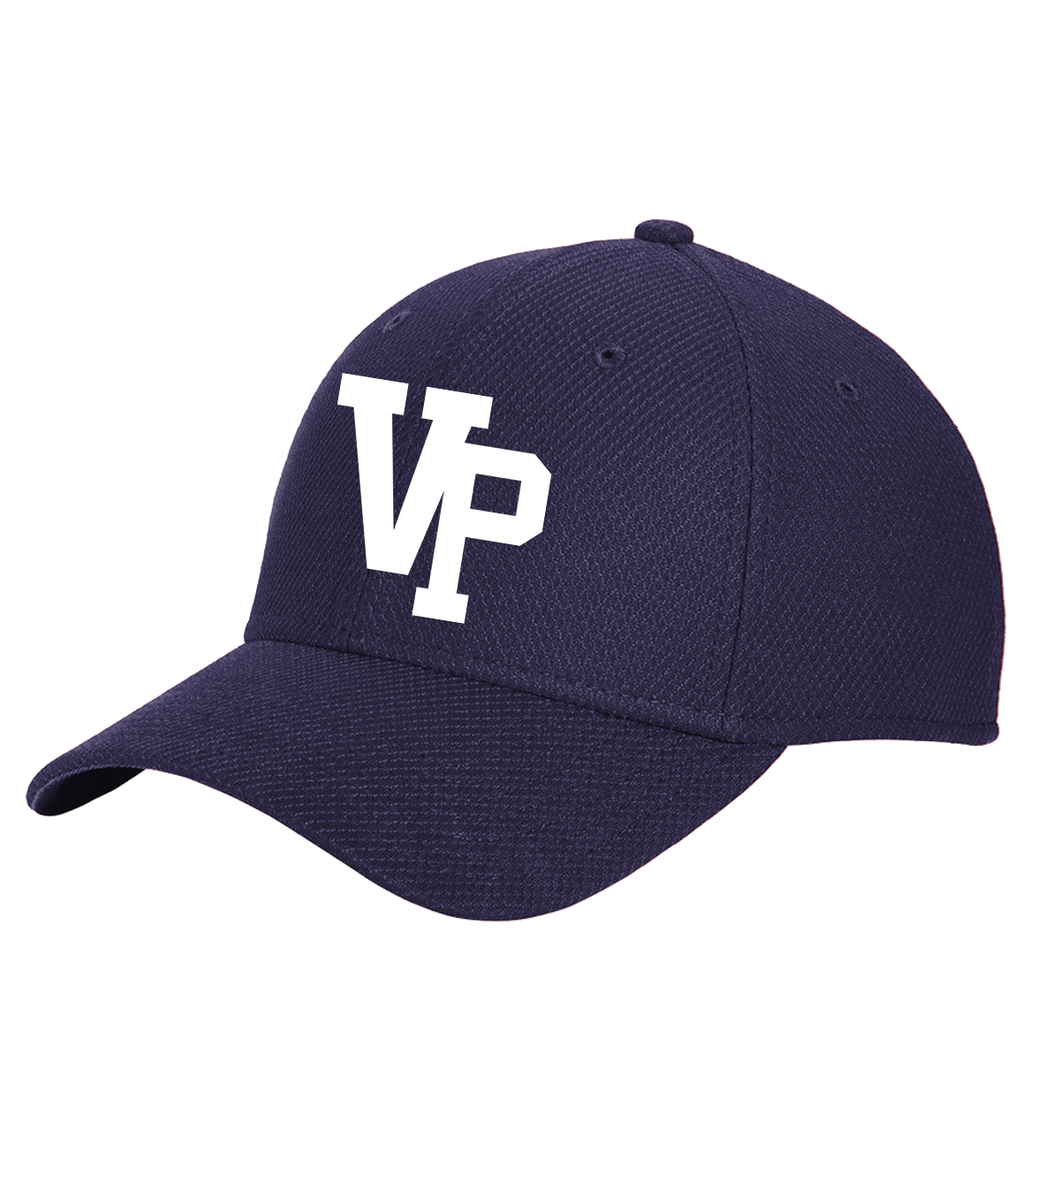 VPLL - New Era - Navy Blue Hat *Raised Embroidery logo